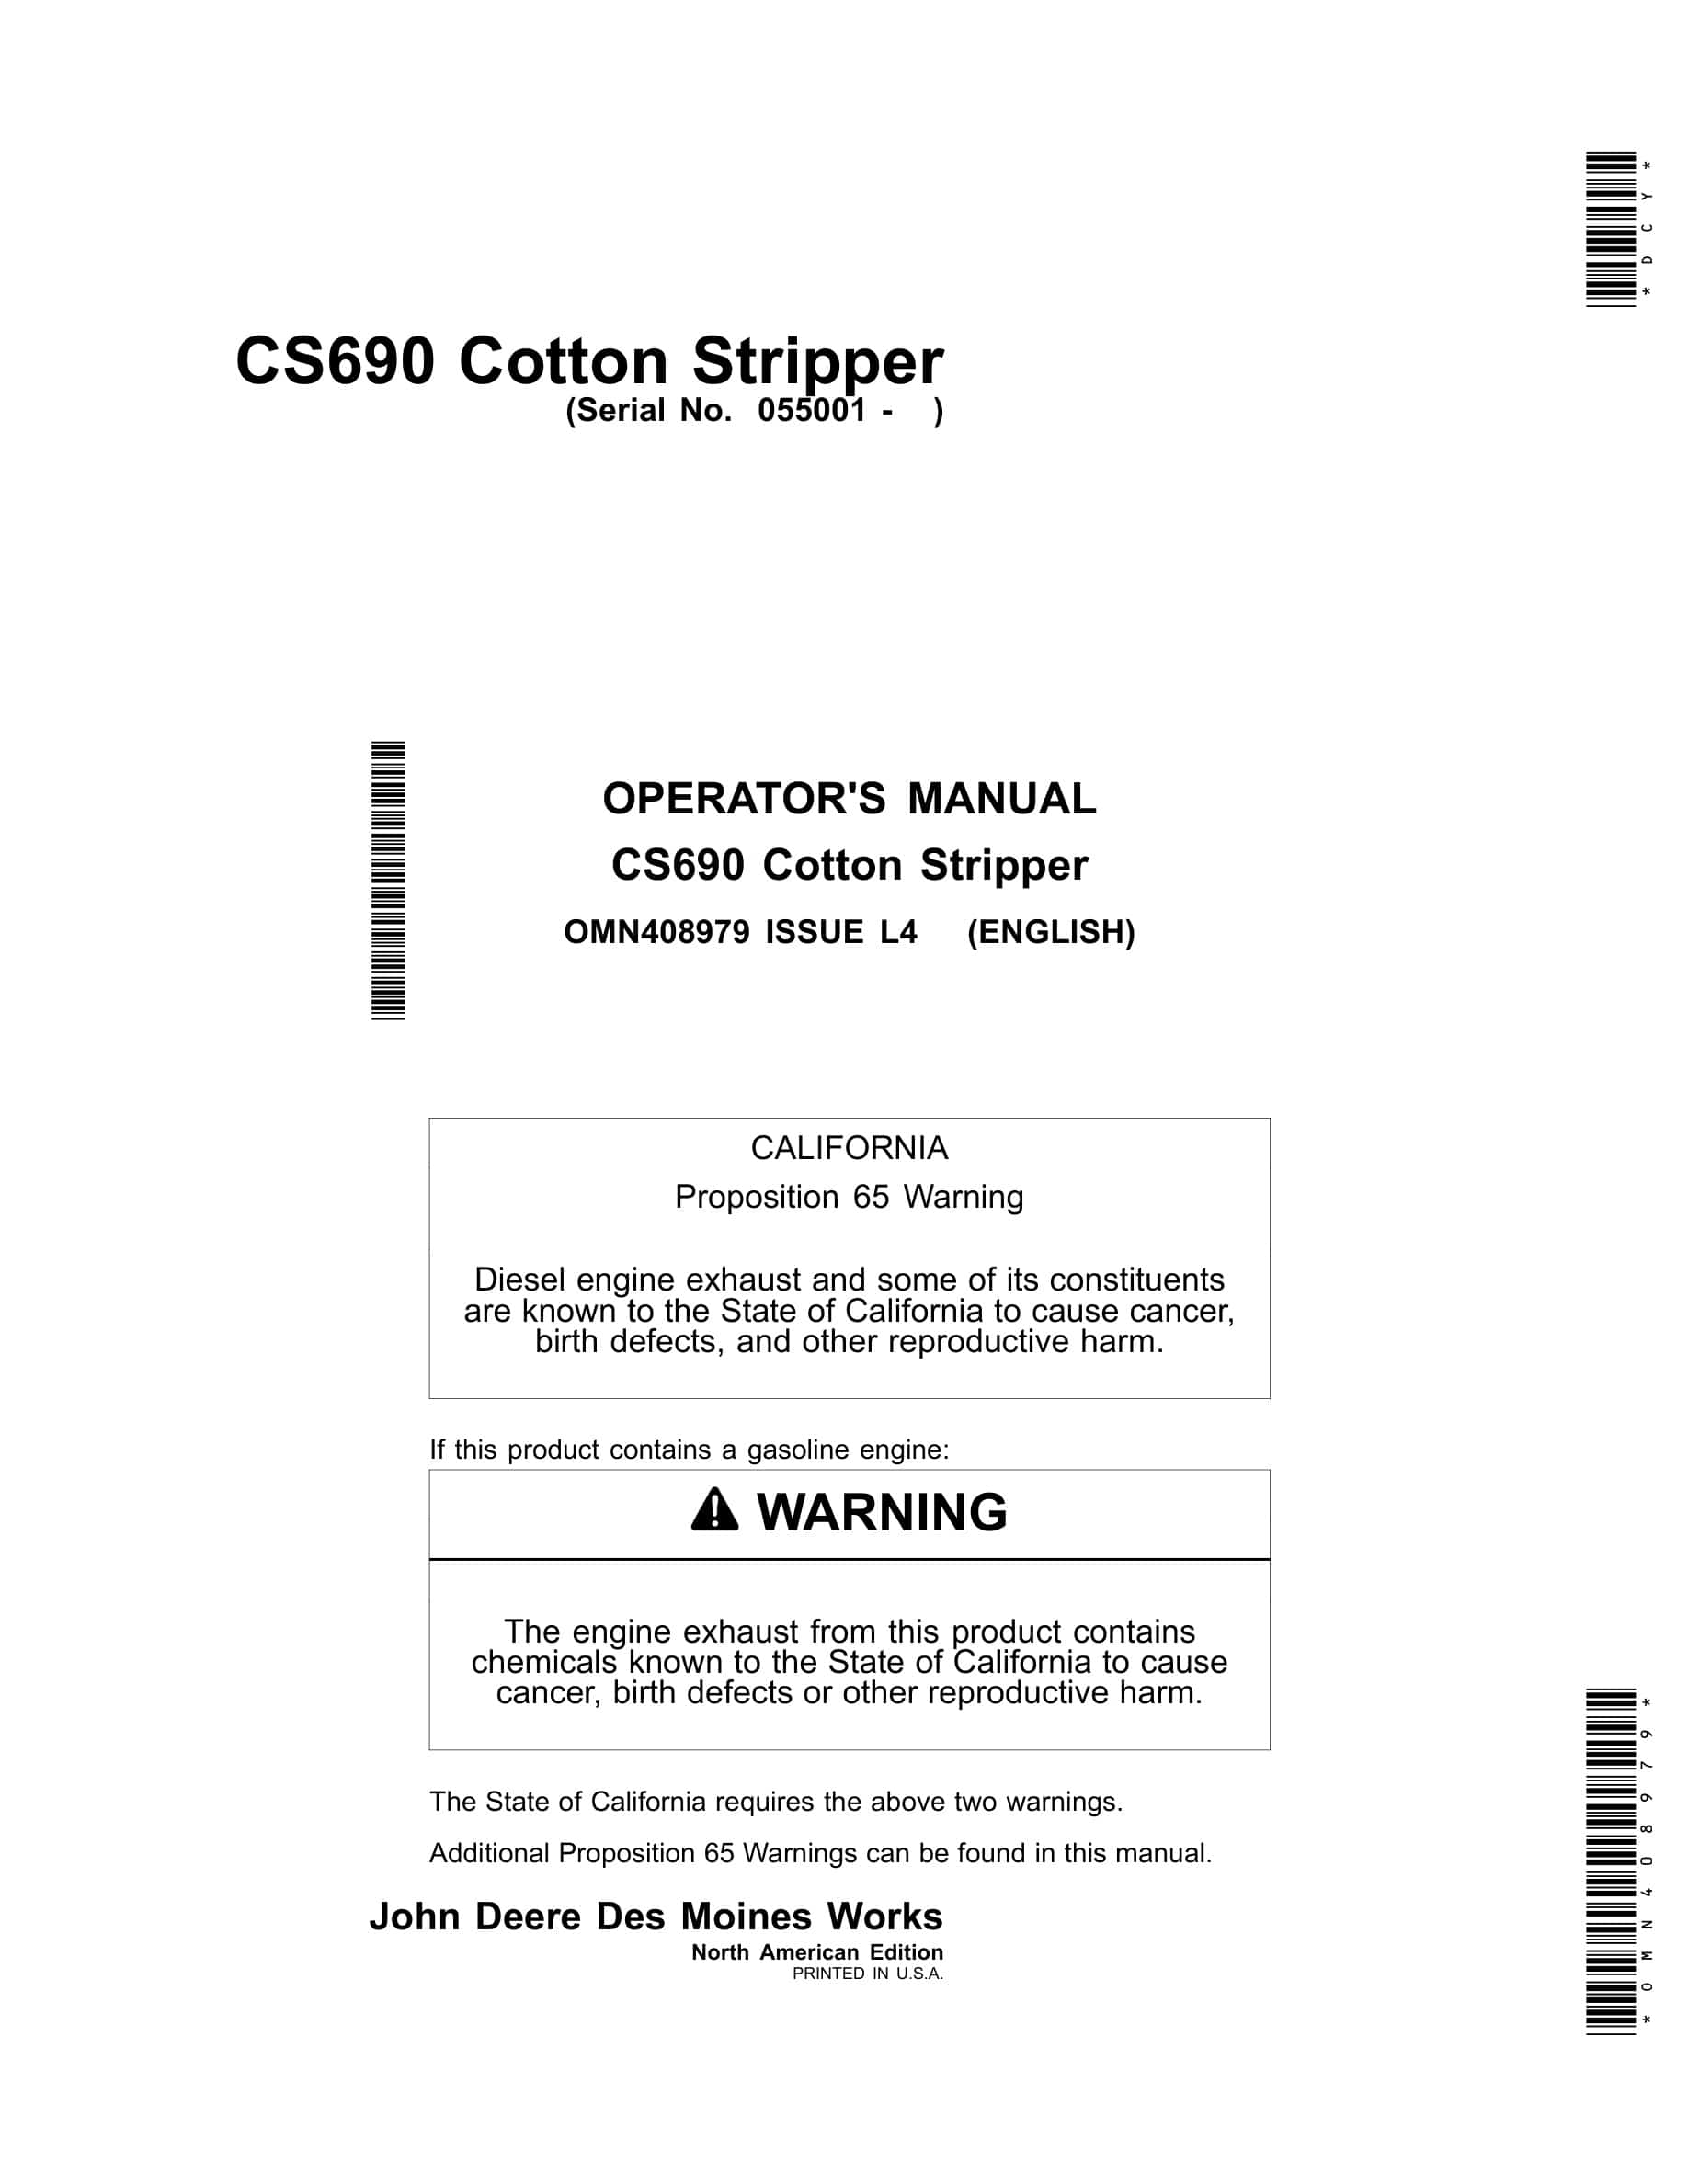 John Deere CS690 Cotton Sripper Operator Manual OMN408979-1